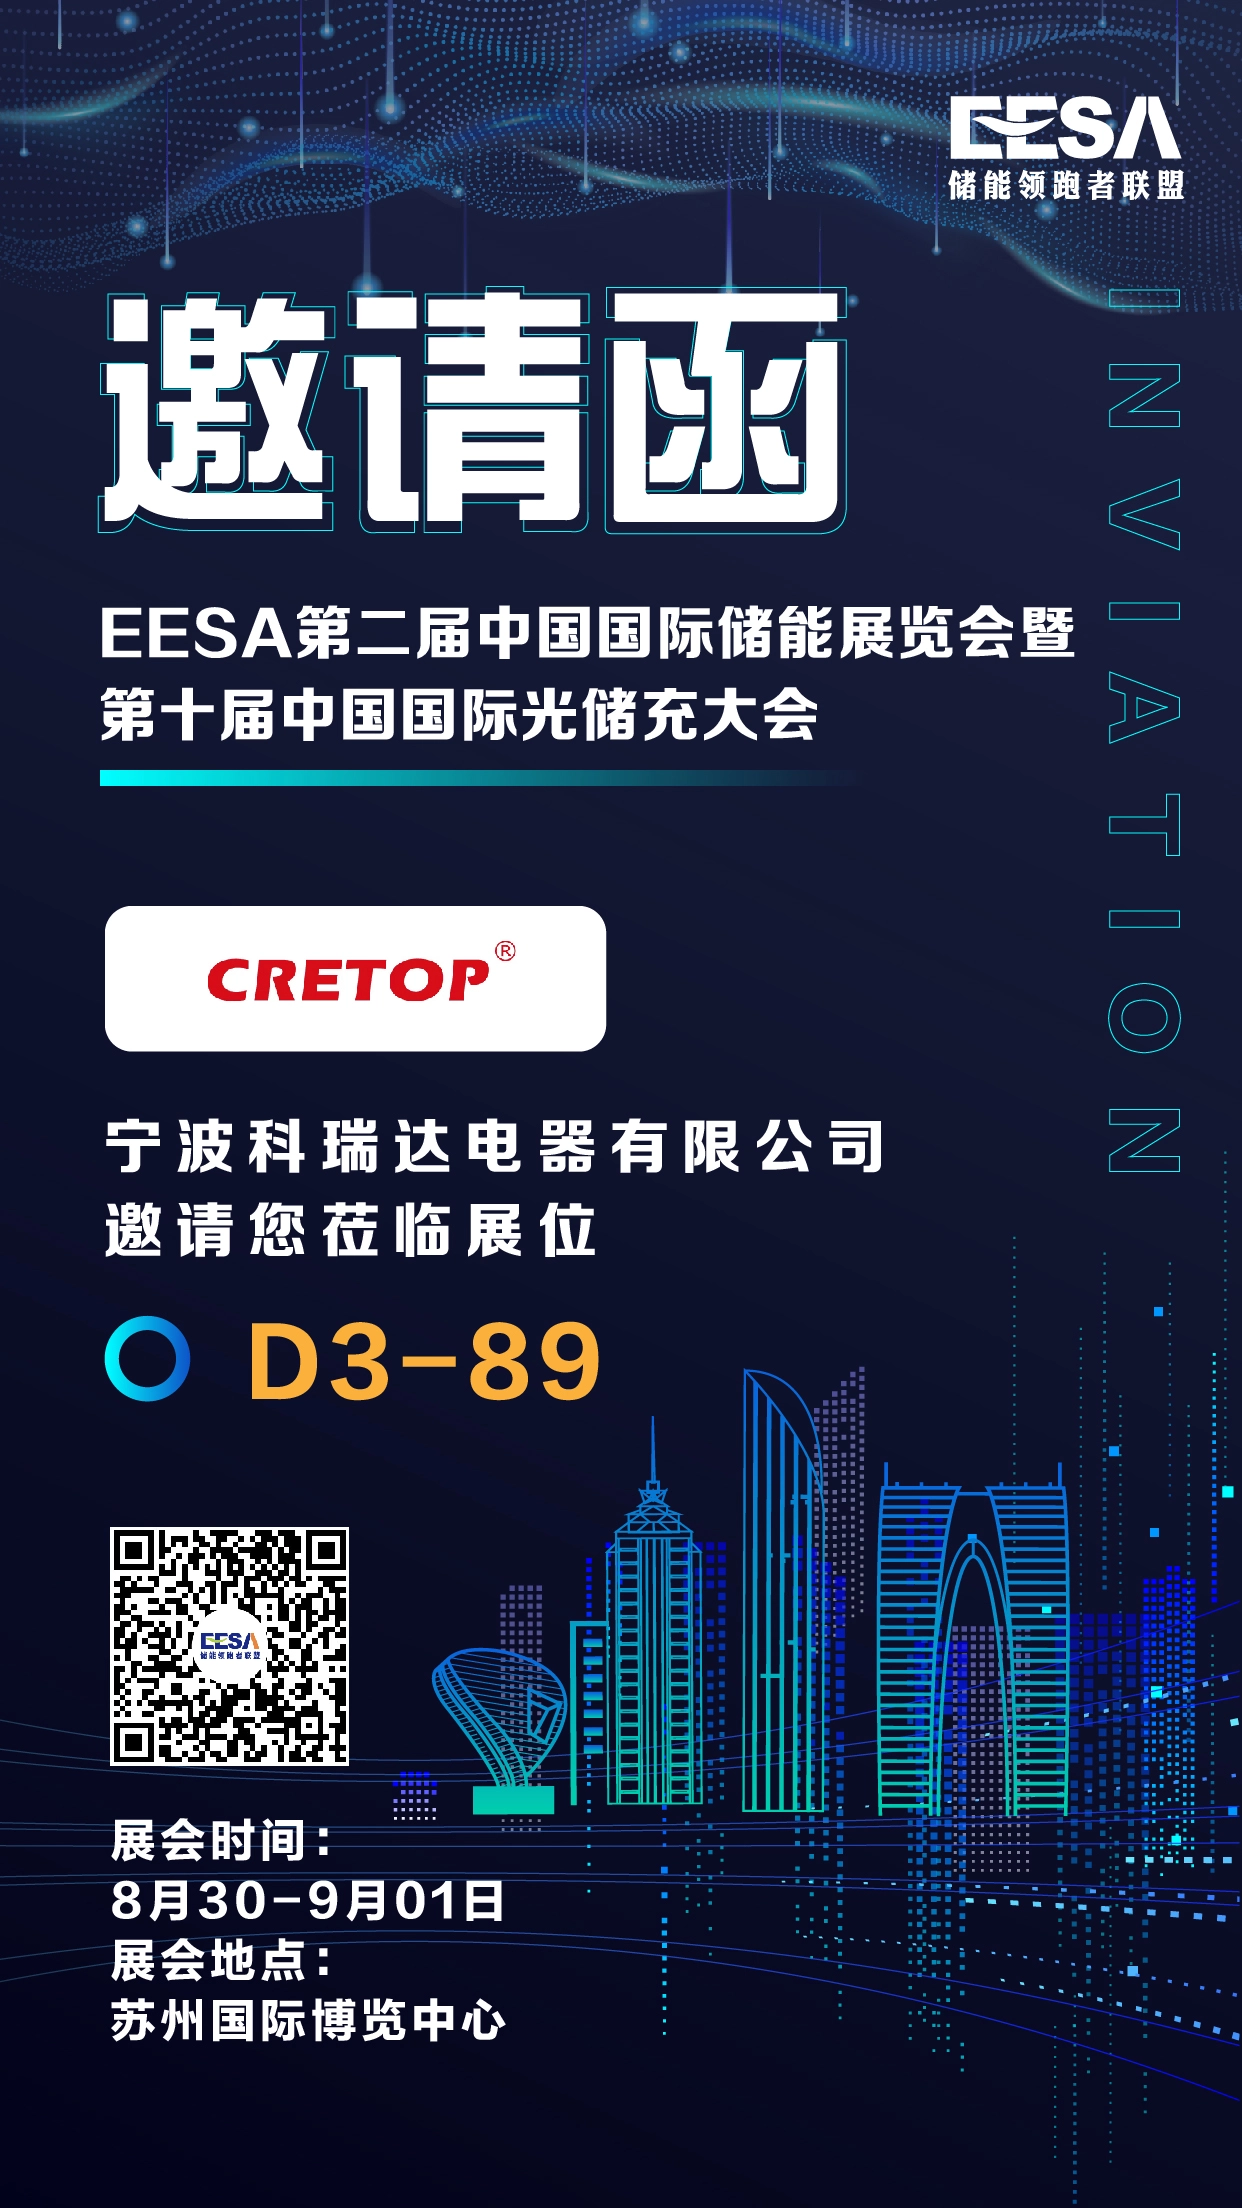 Invitation of Suzhou EESA